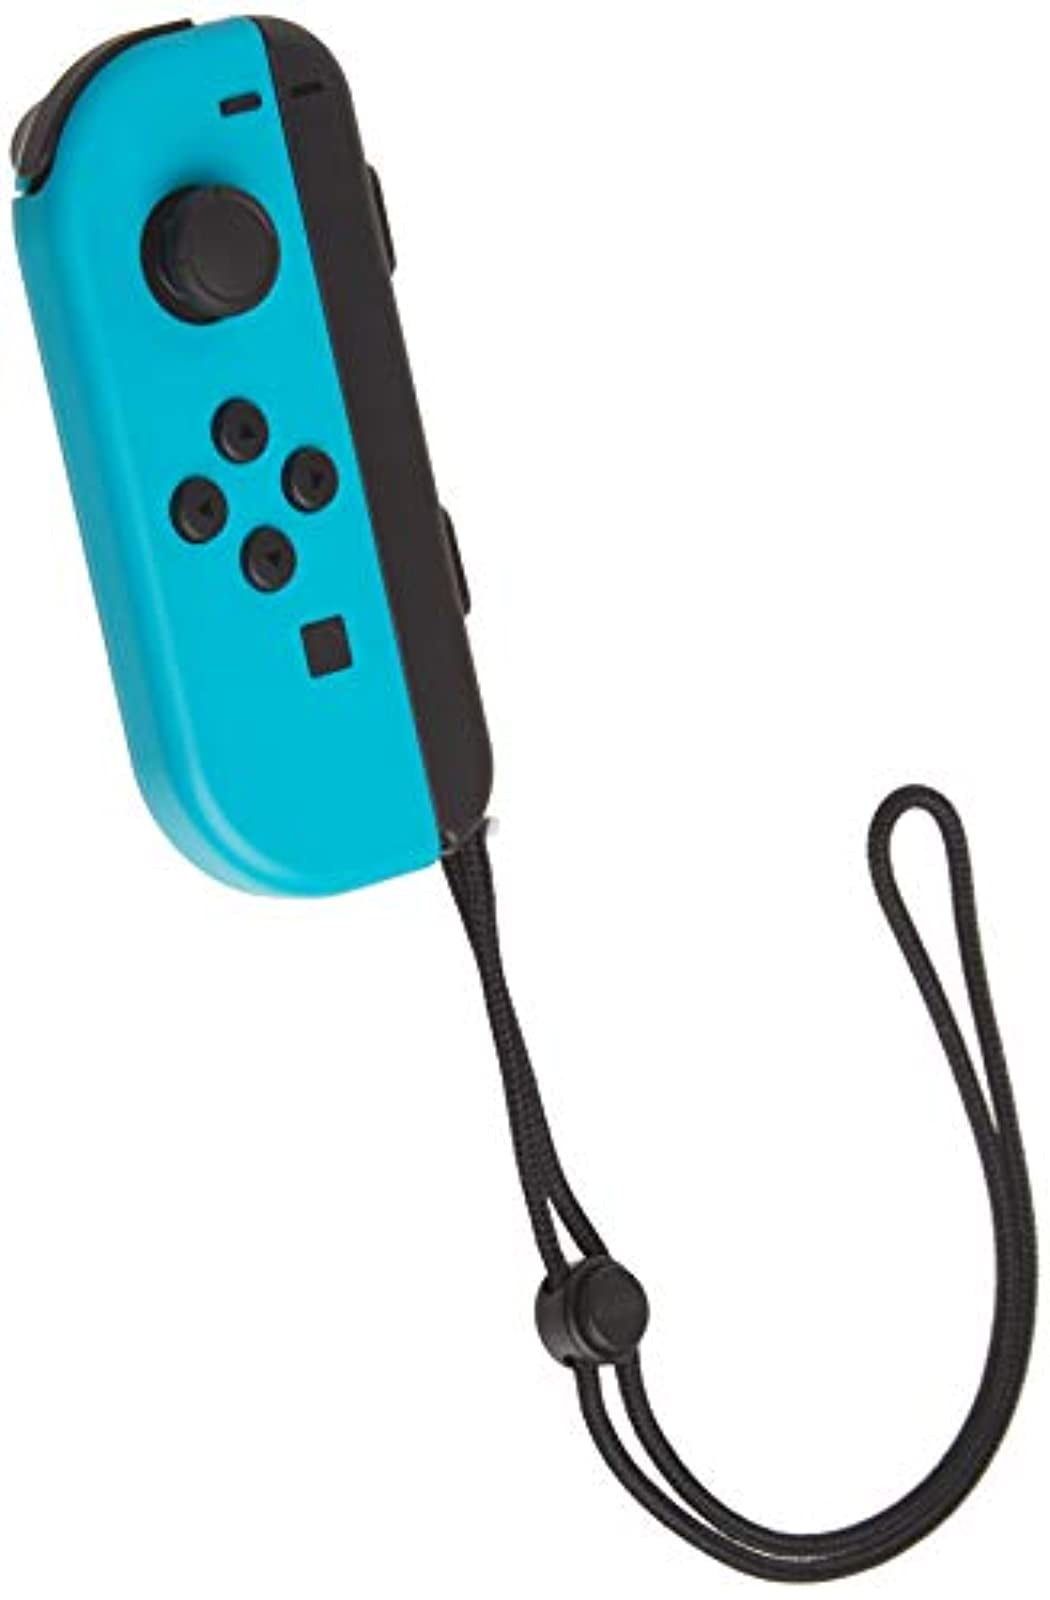 Restored Joy-Con Neon Blue For Nintendo (Refurbished) - Walmart.com